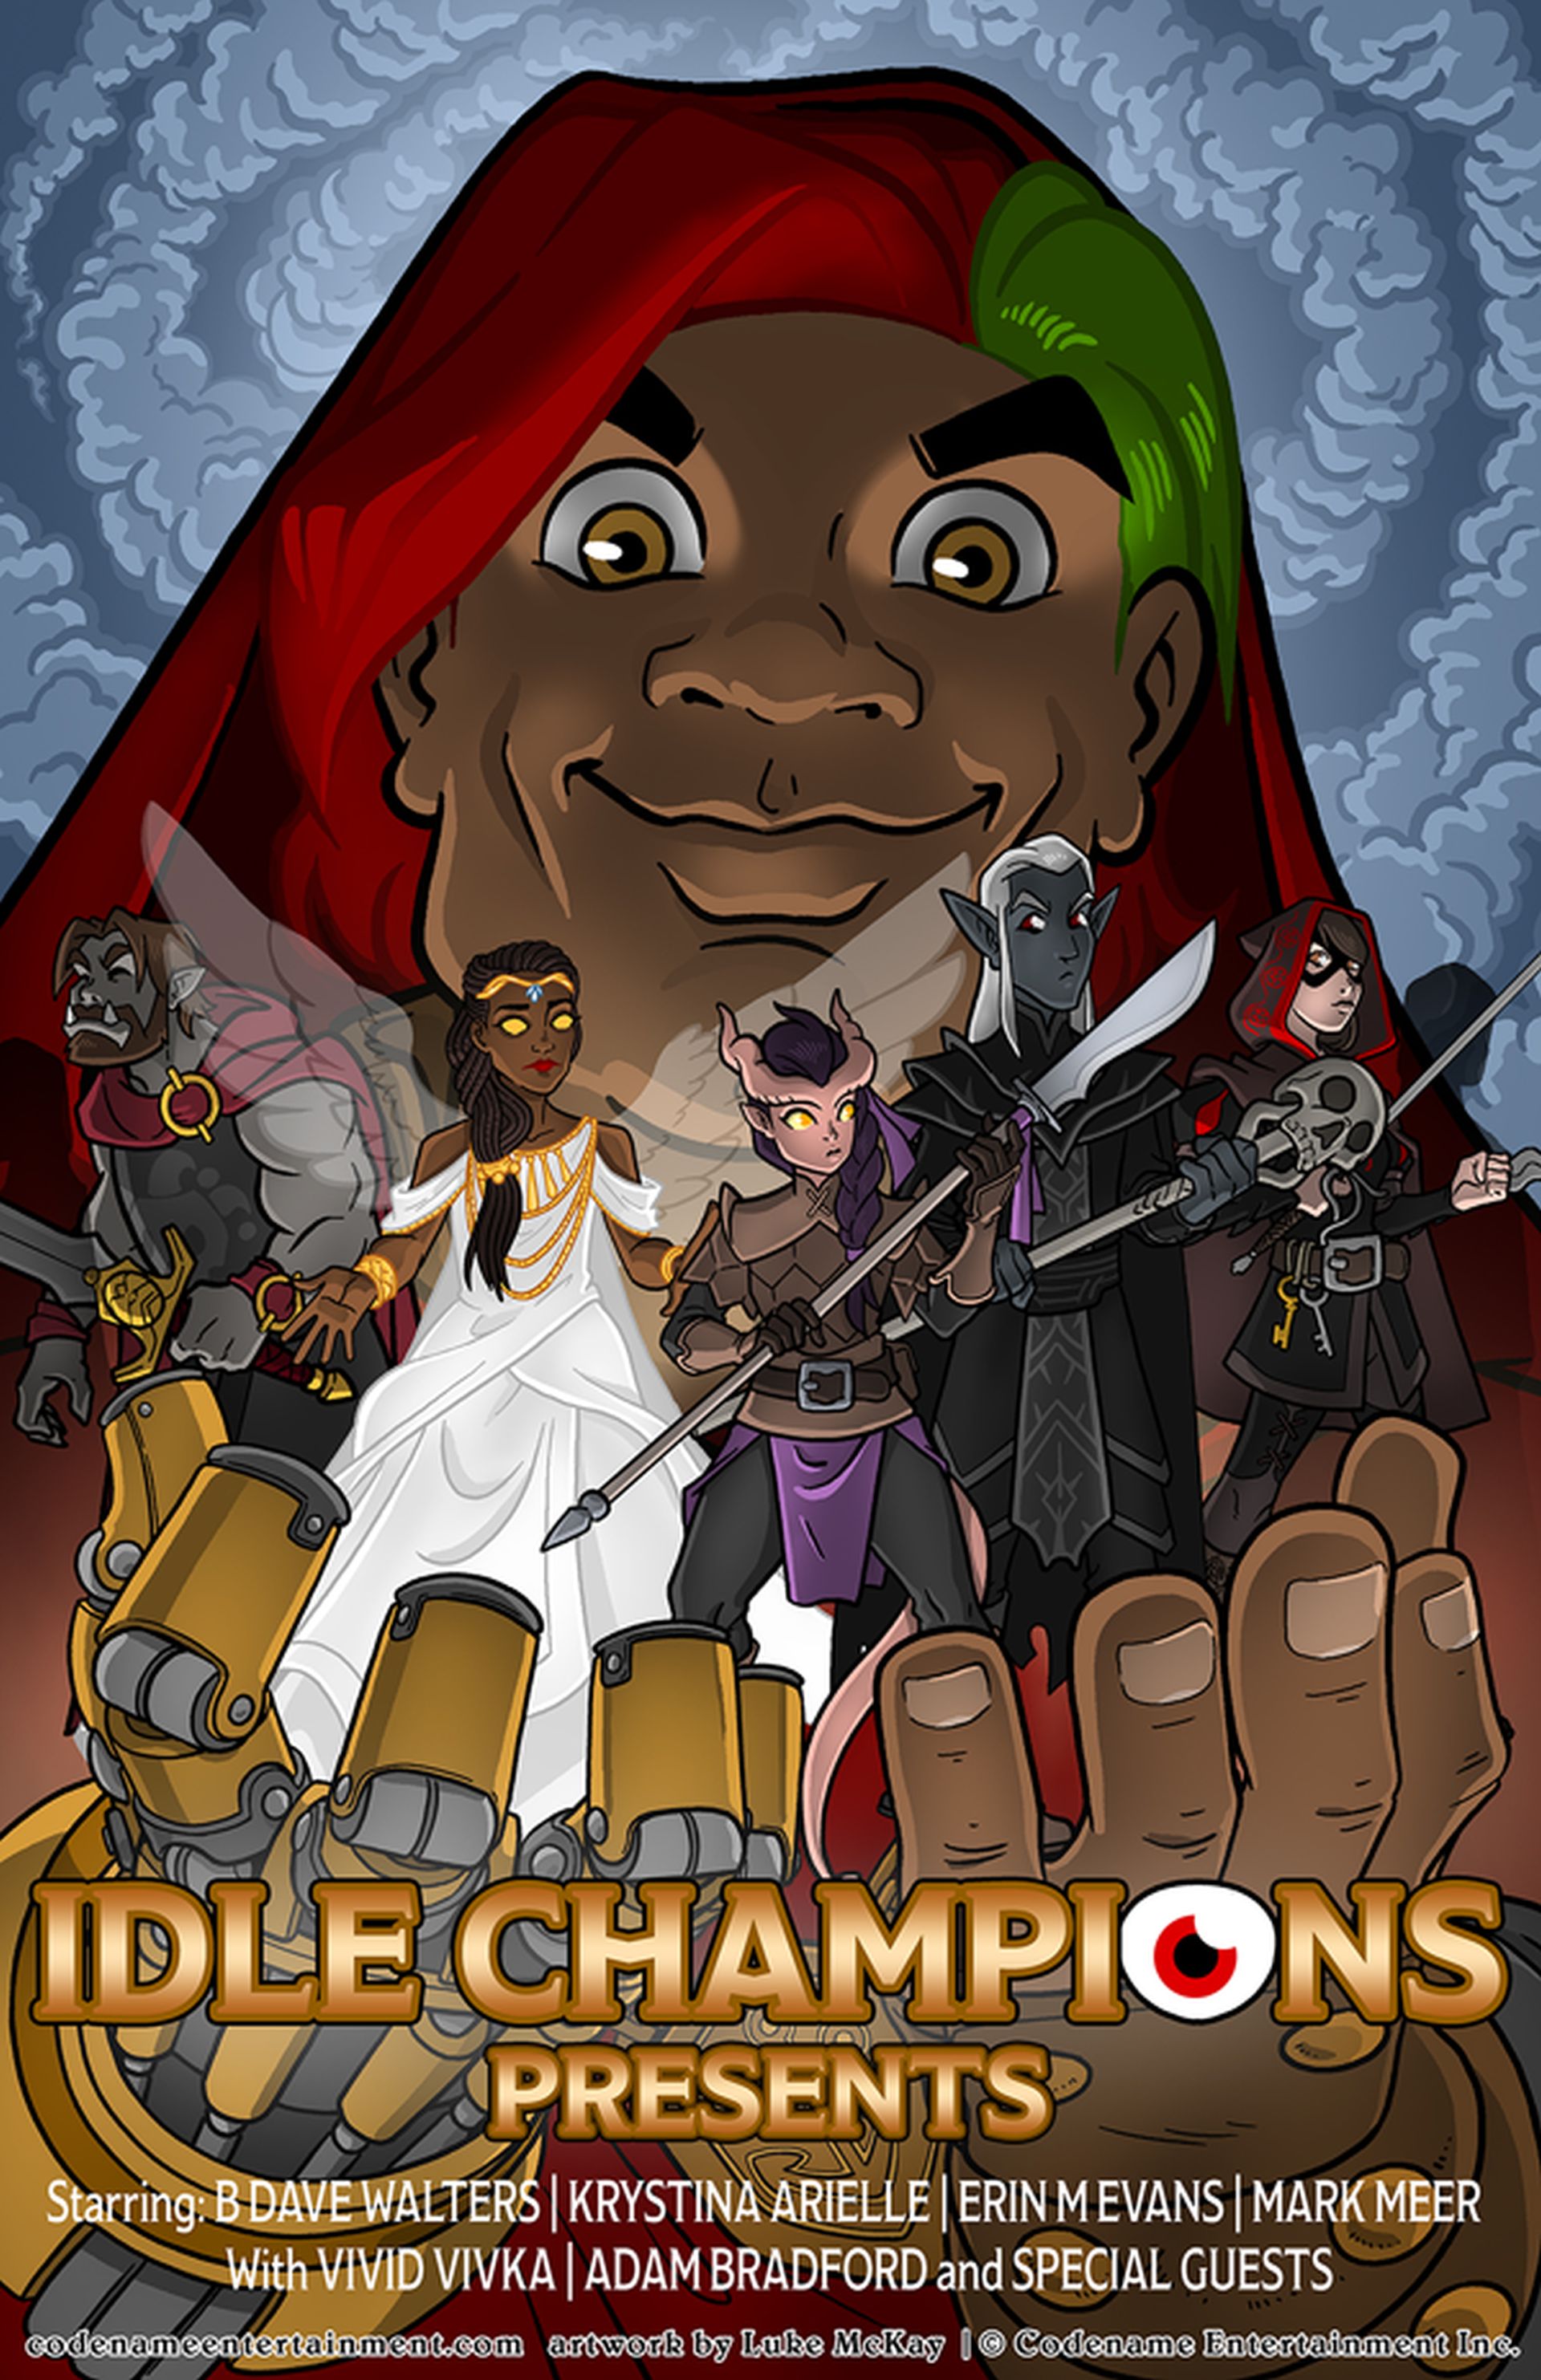 Idle Champions